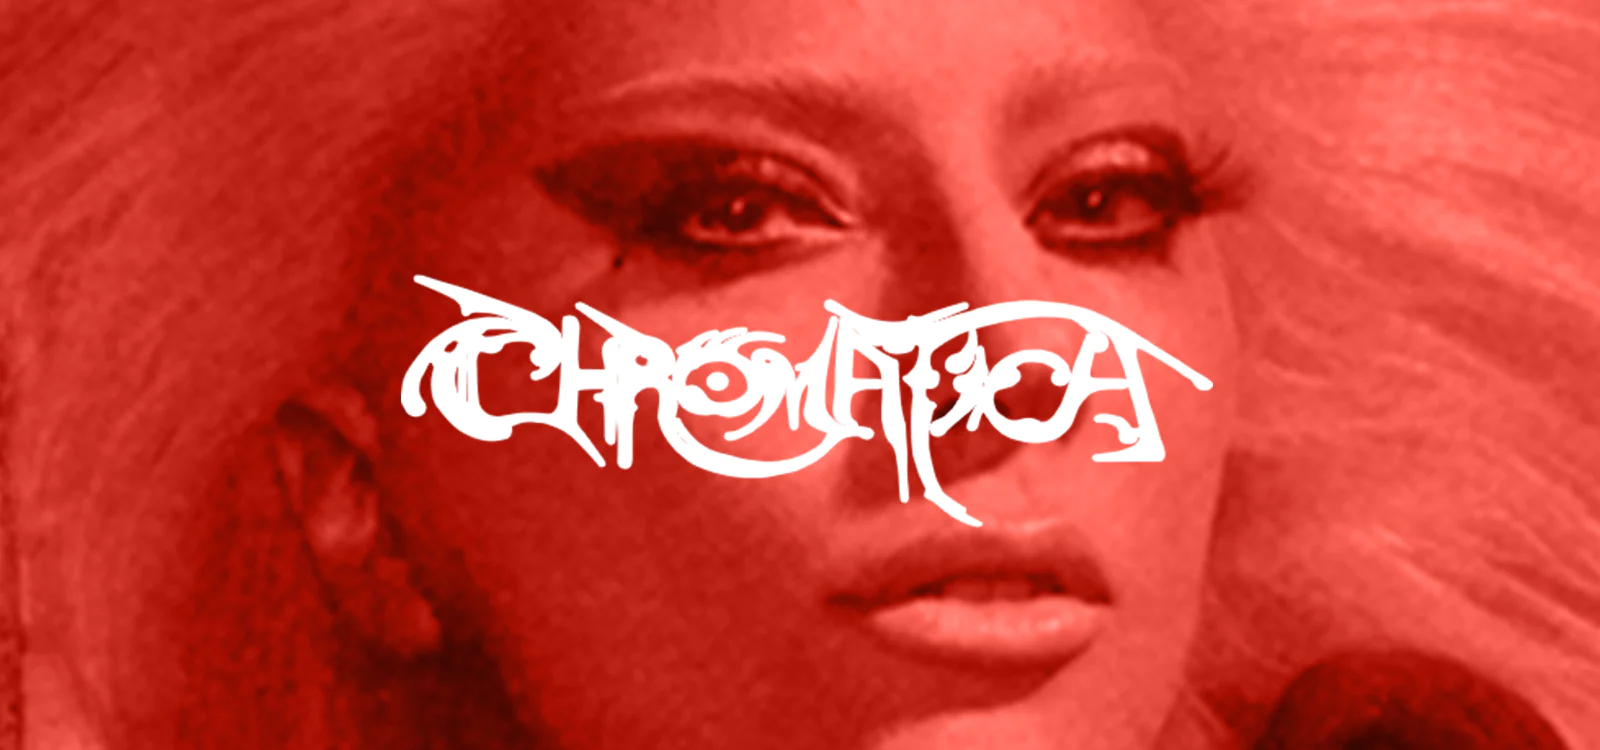 Lady Gaga Eras Chromatica Teaser